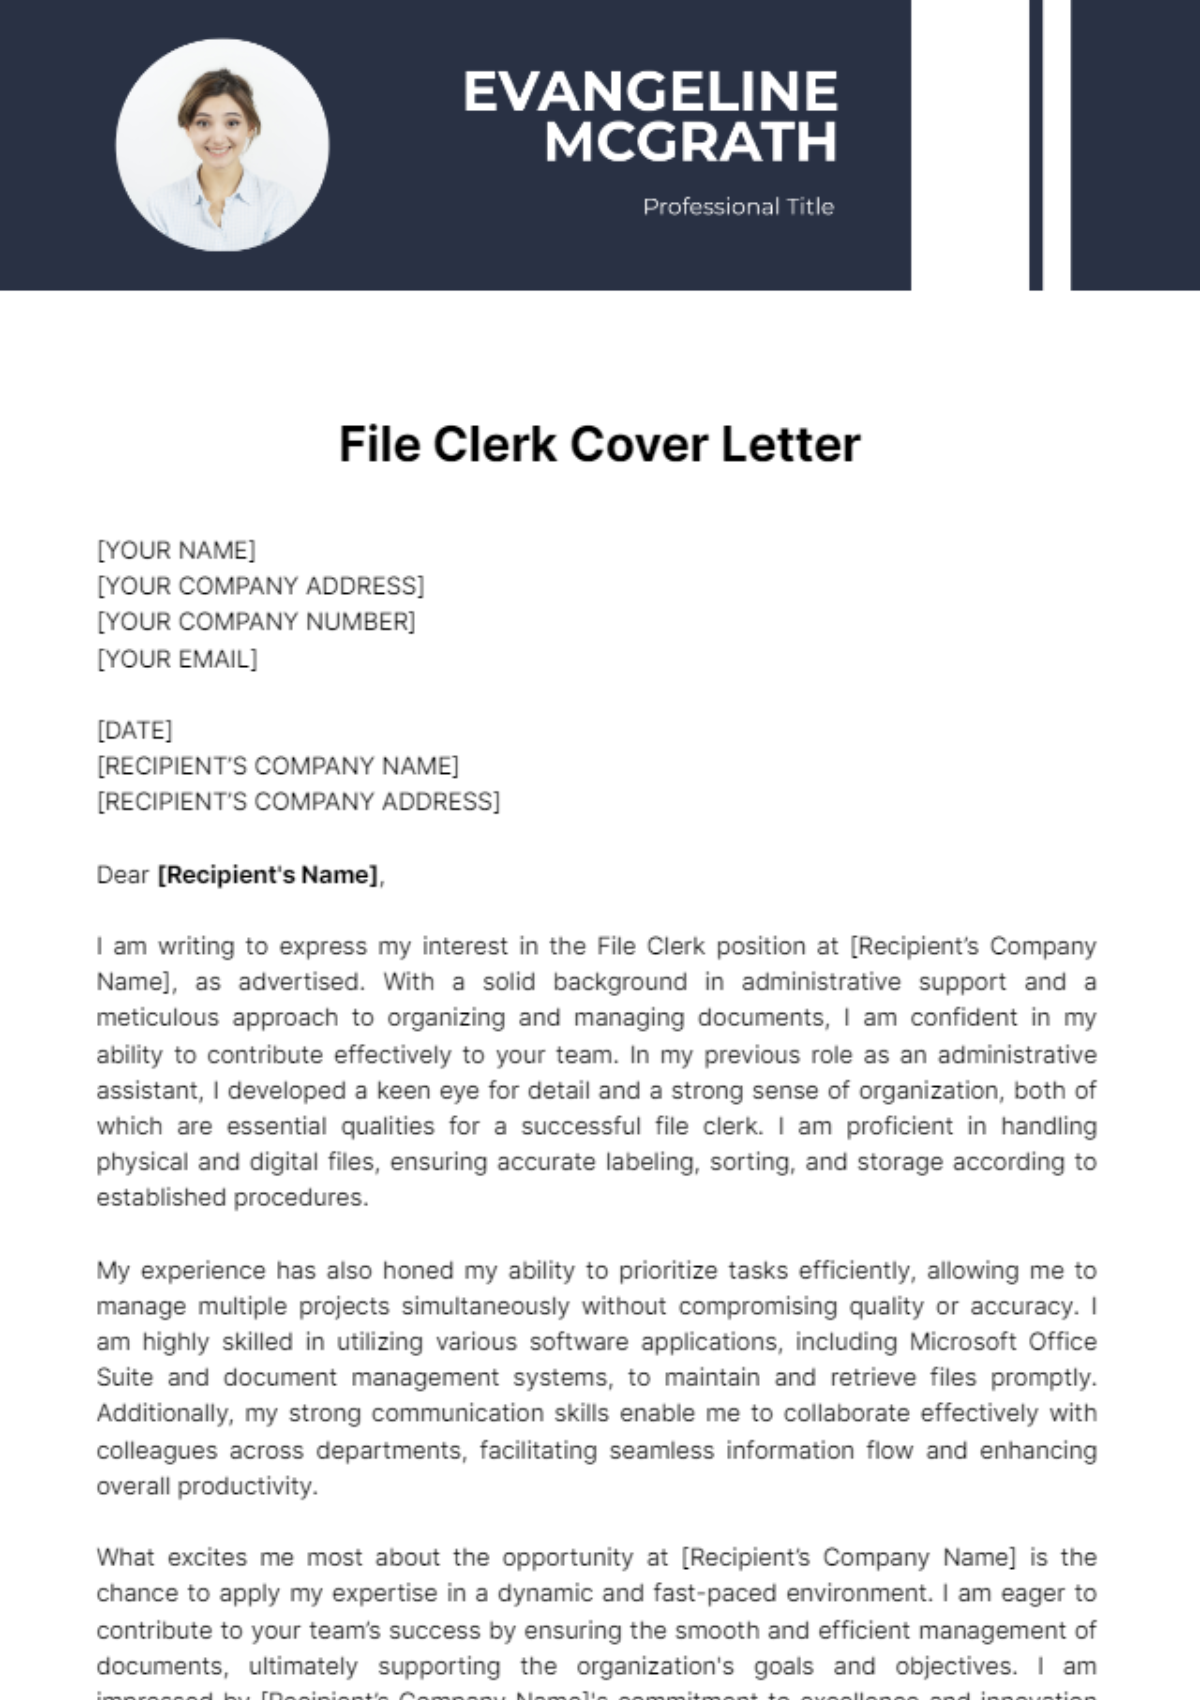 File Clerk Cover Letter Template